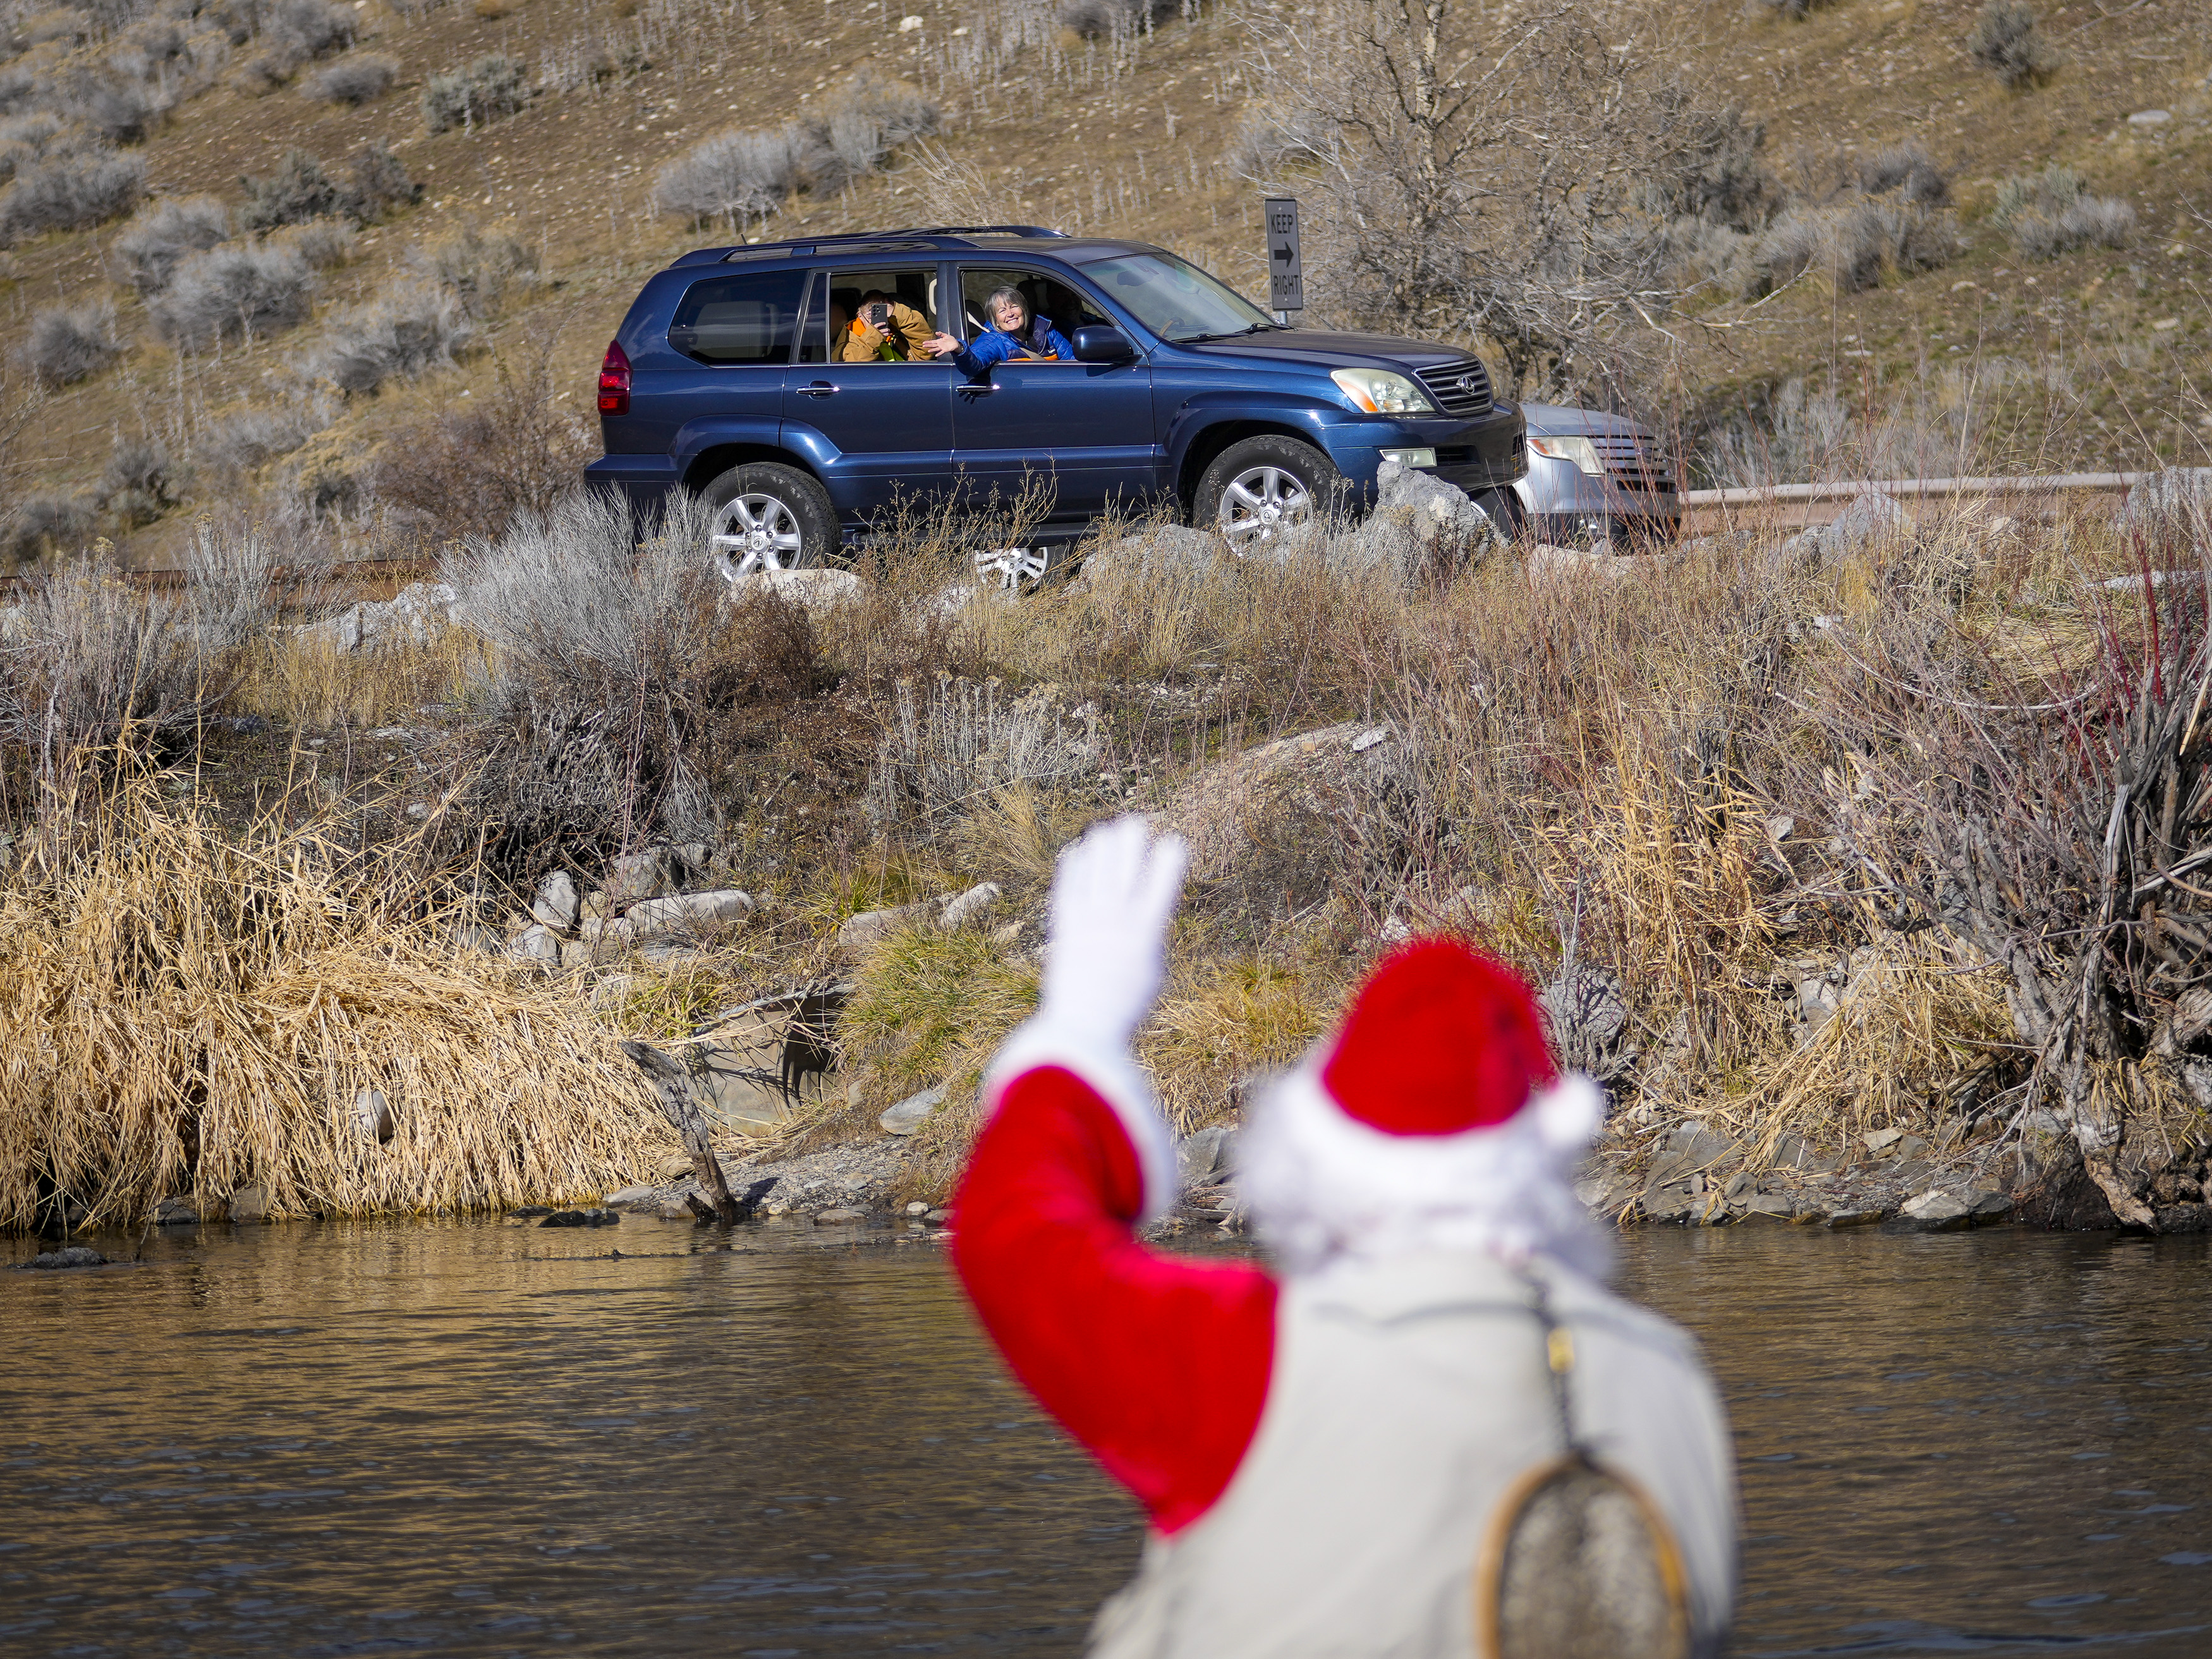 Utahn dressed as Santa Claus goes fly fishing in Provo River